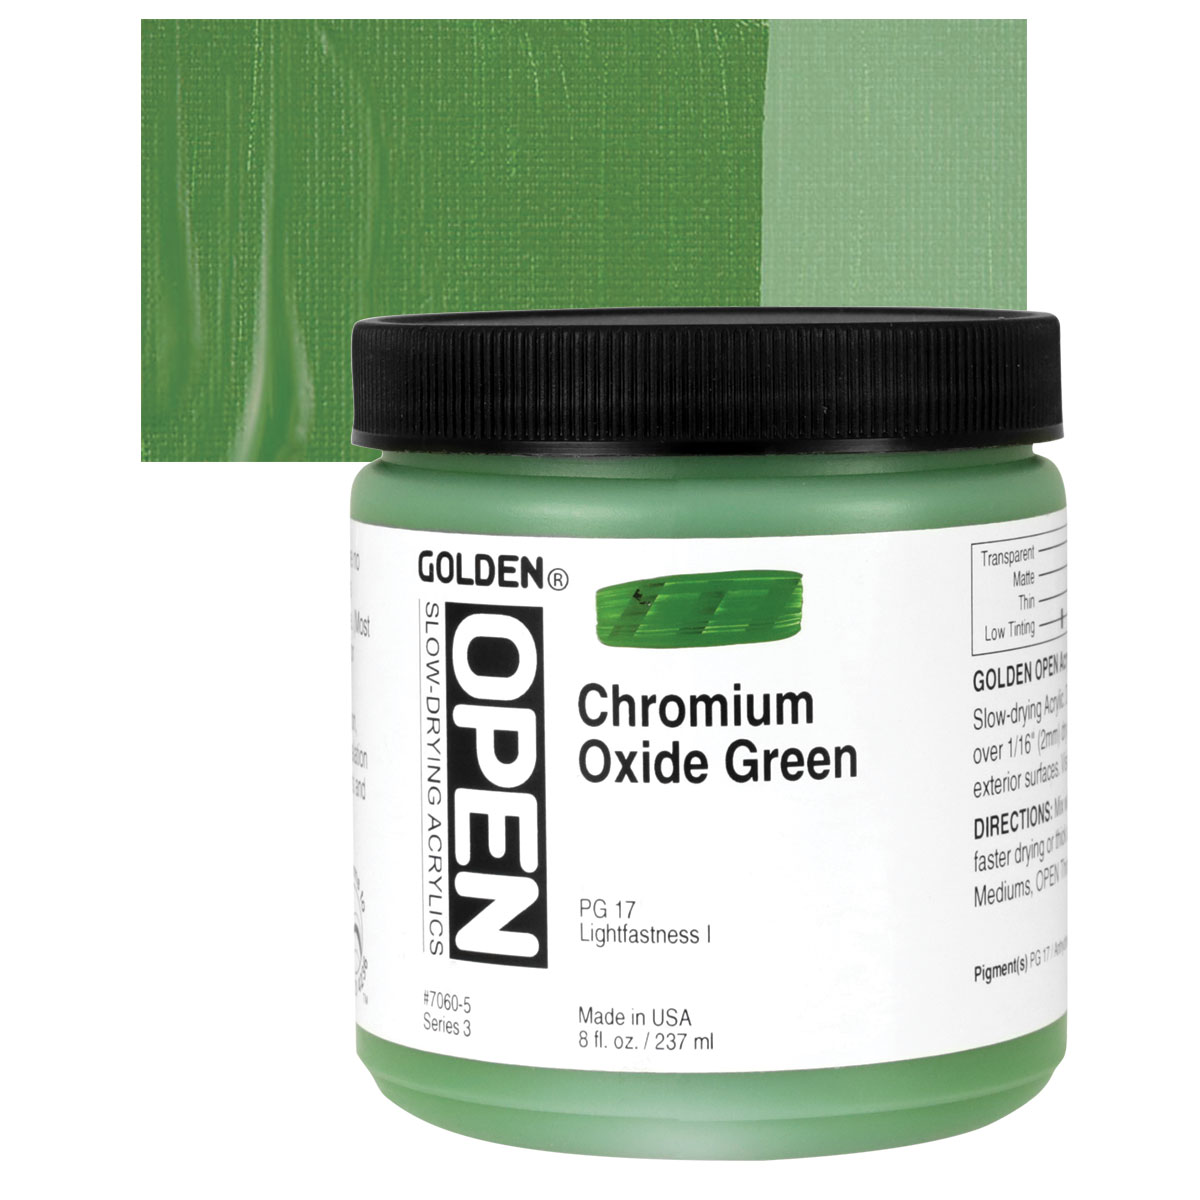 chromium oxide green uses